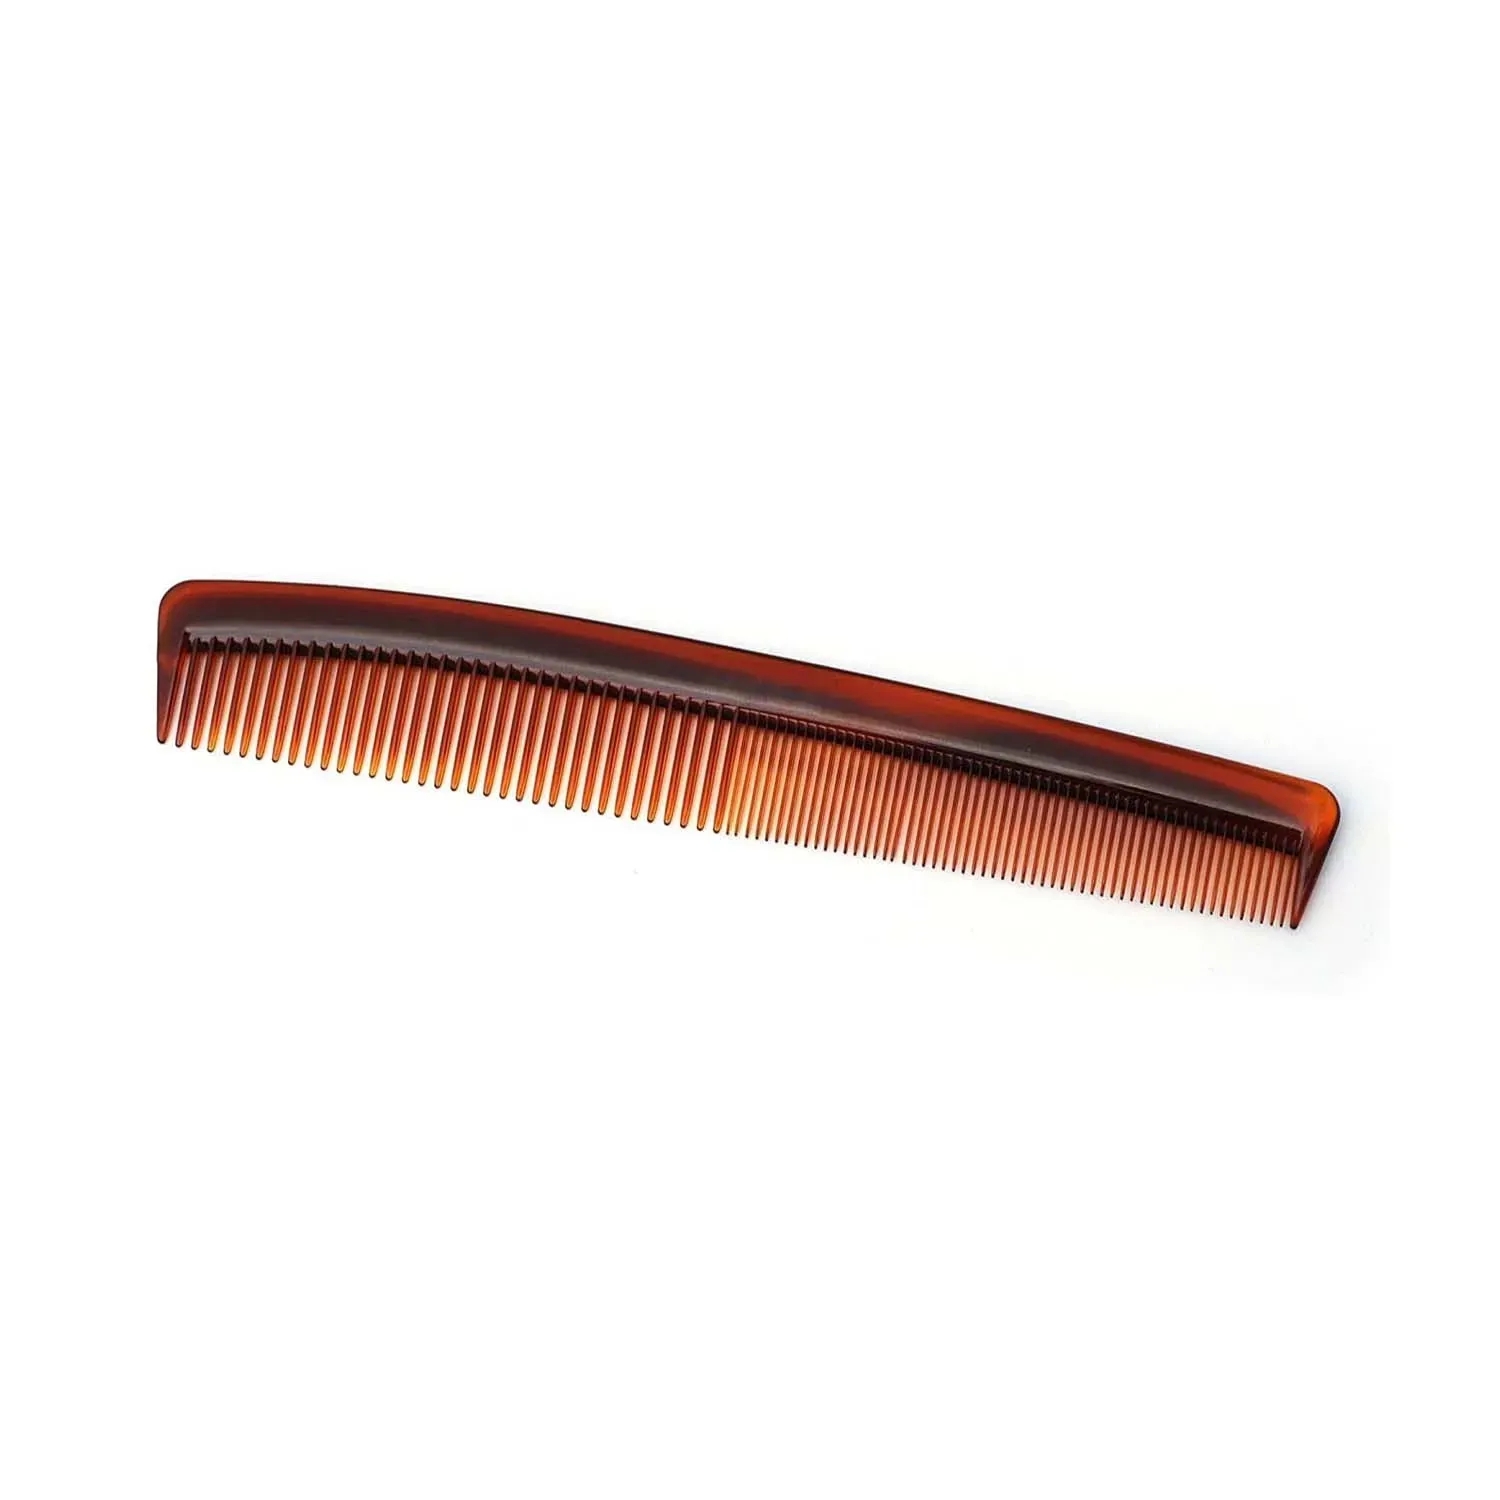 Basicare | Basicare All-Purpose Hair Comb